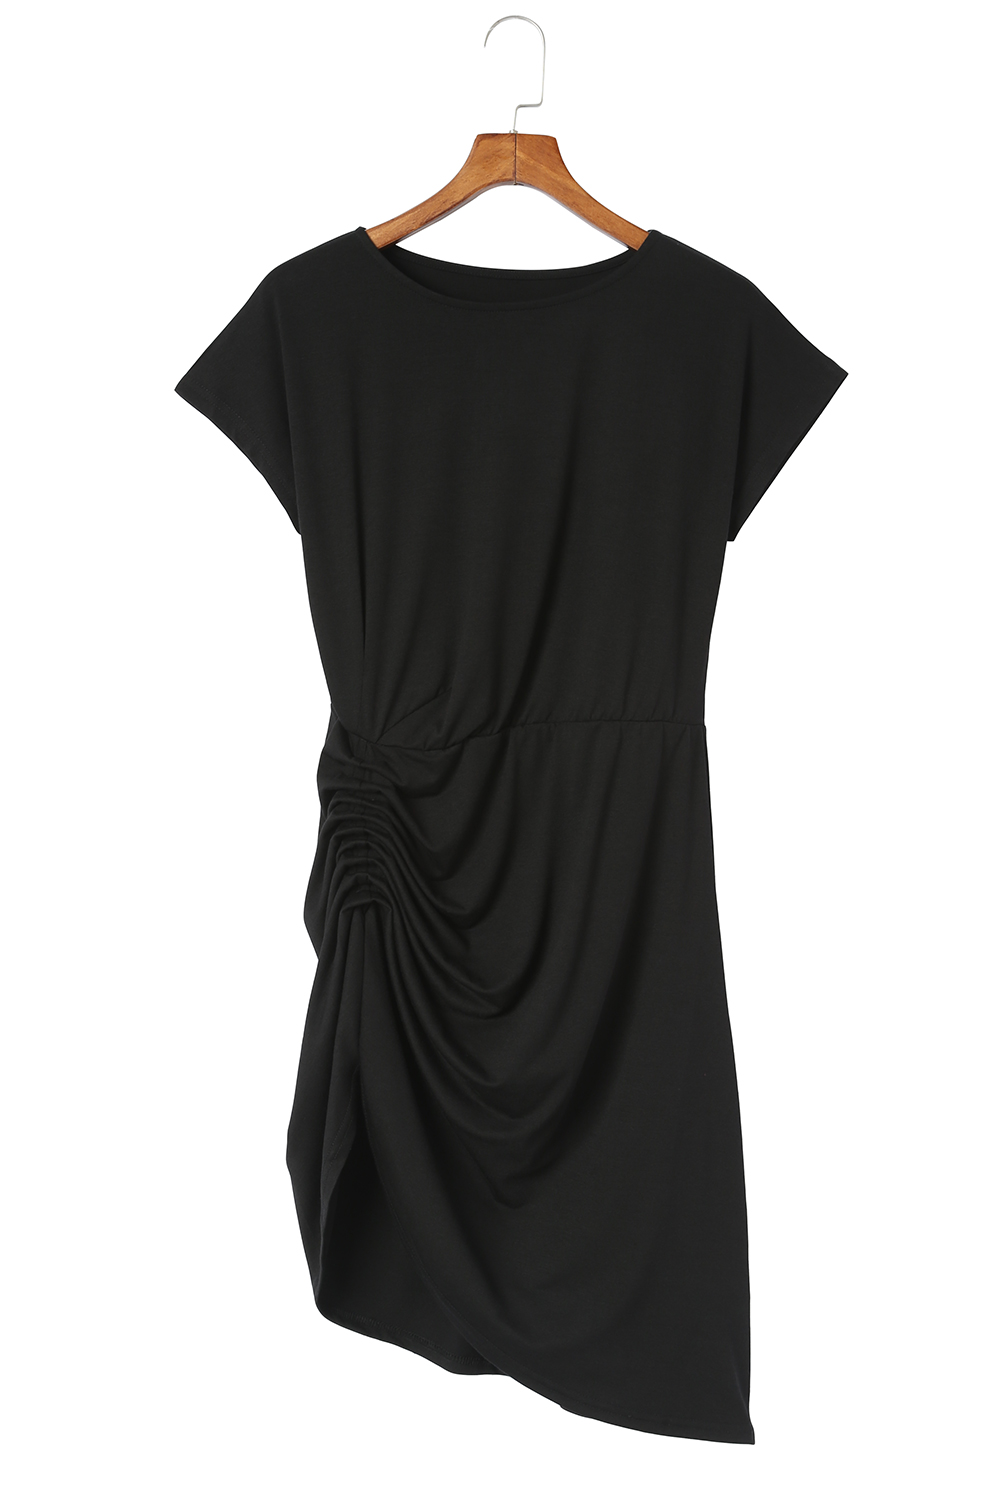 $7.4 Black Side Shirring Short Sleeve Mini Dress Wholesale